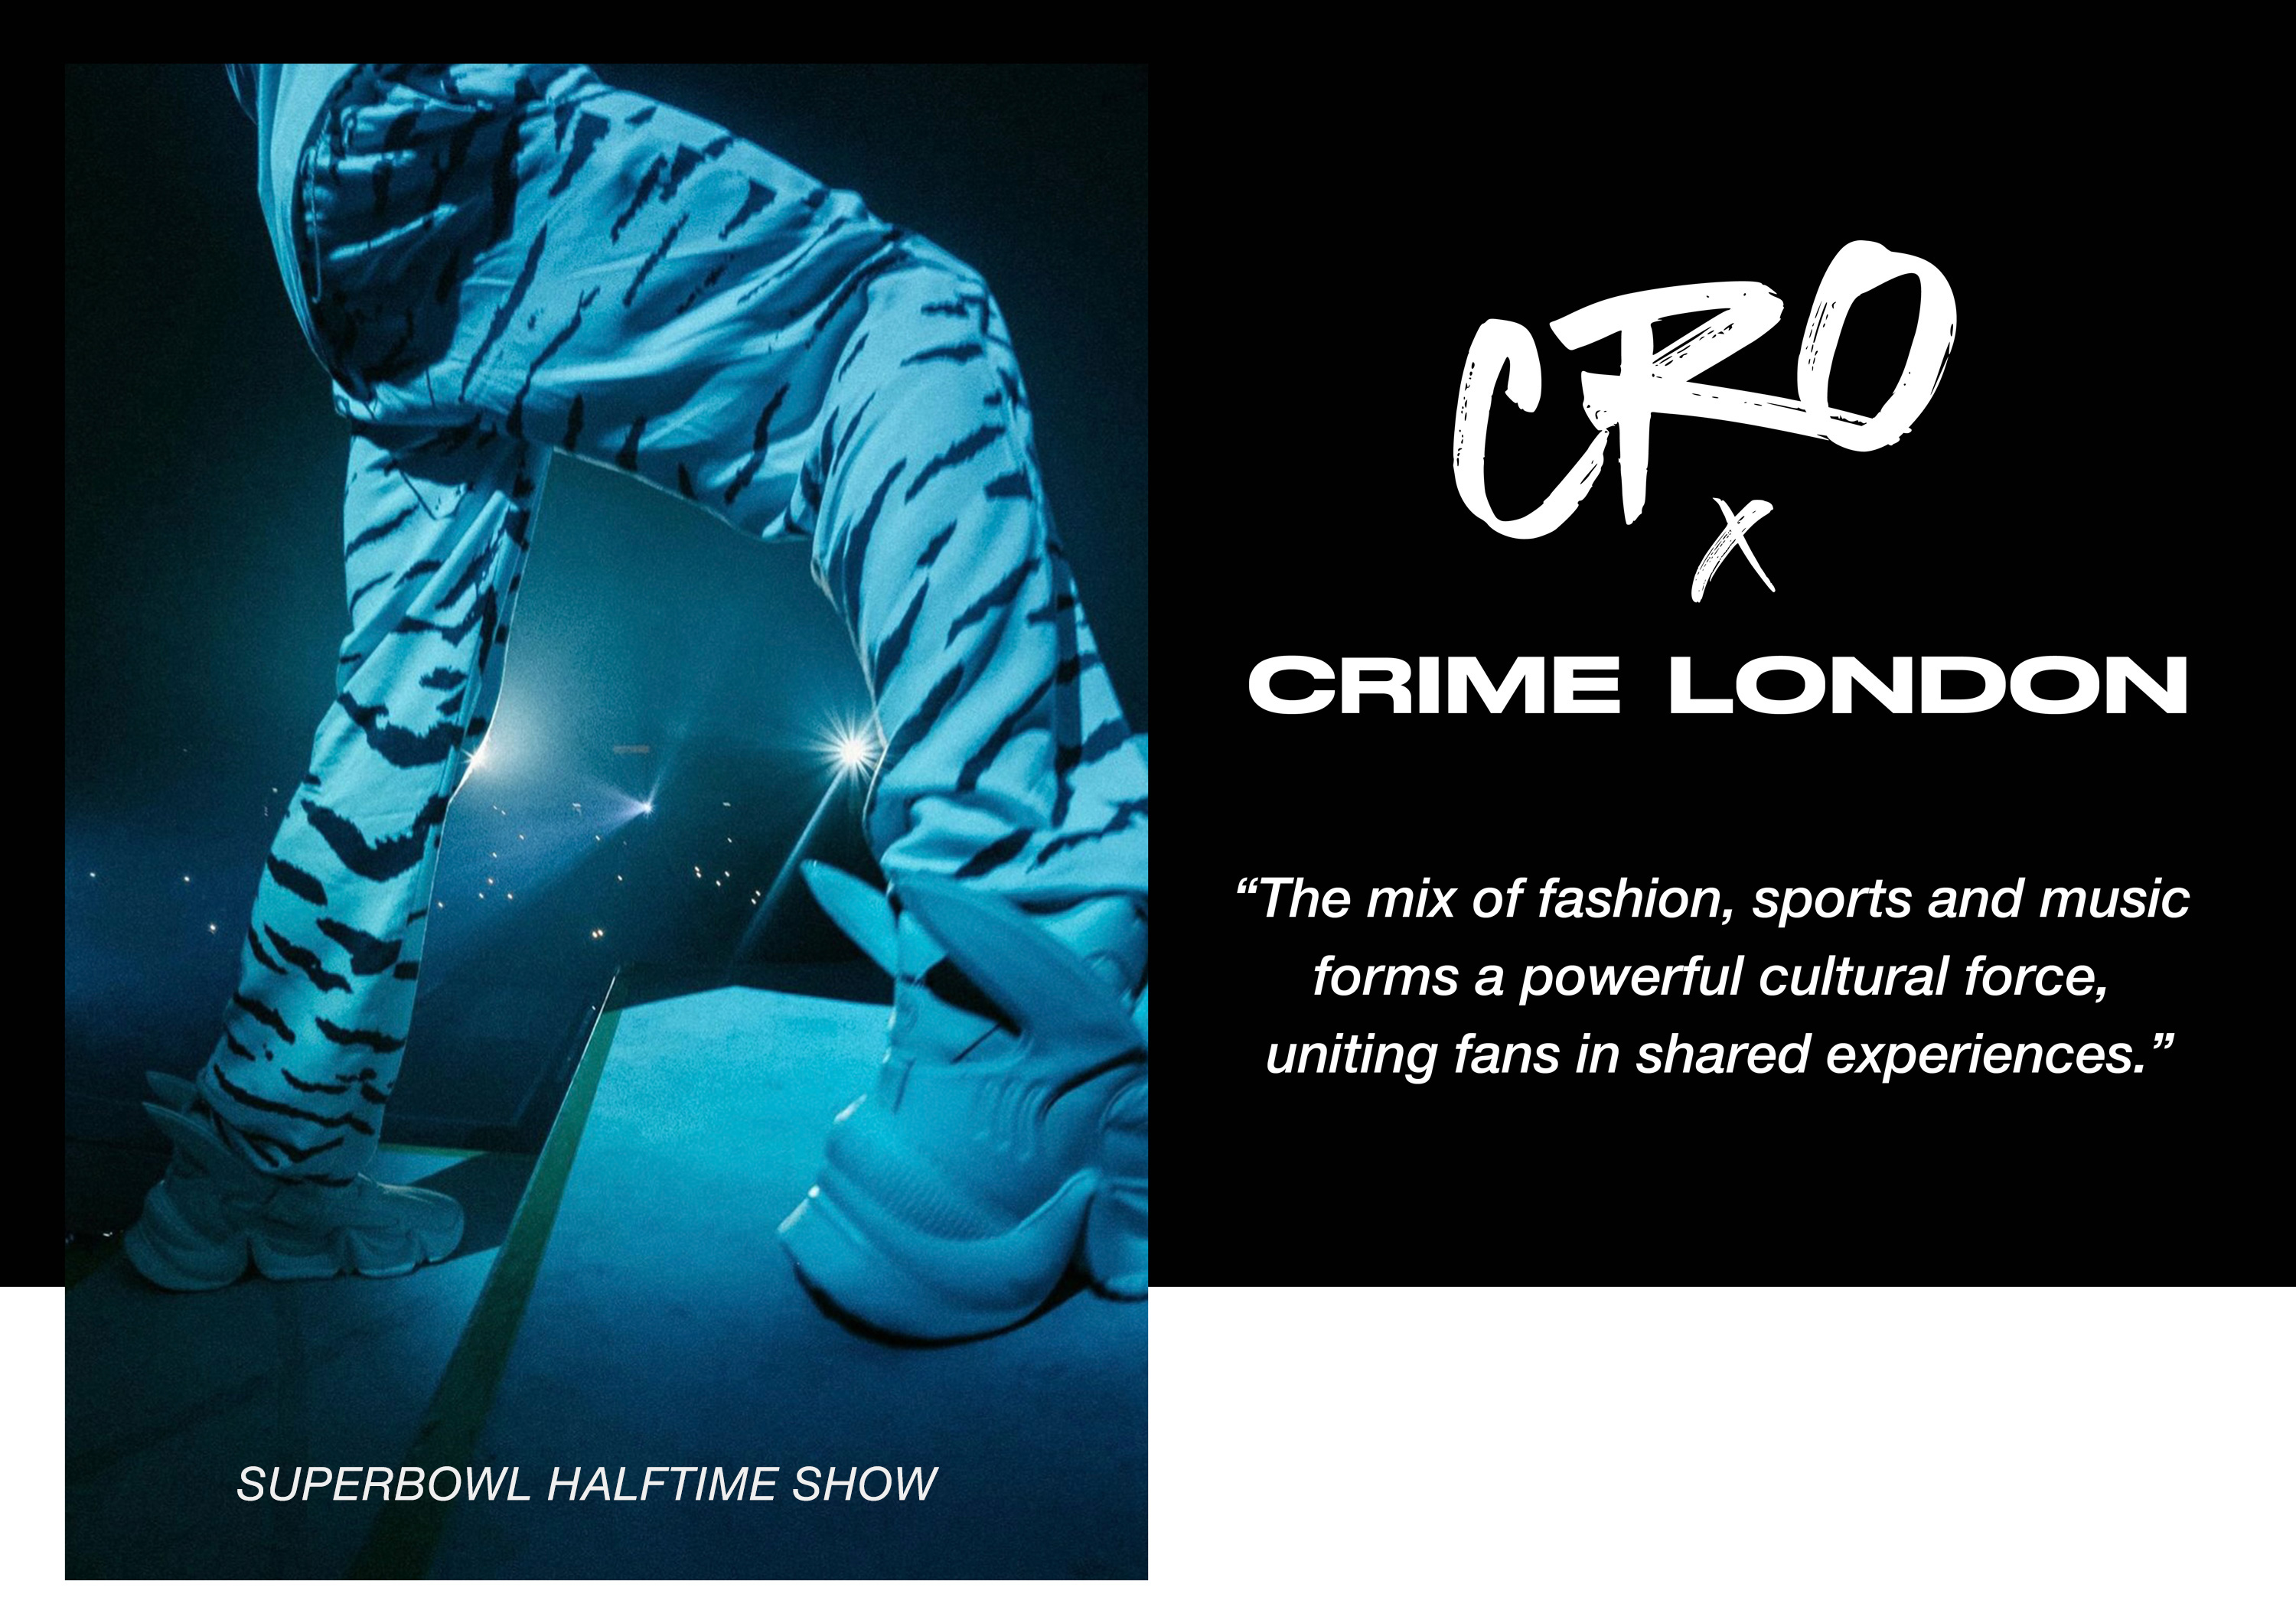 Cro x Crime London